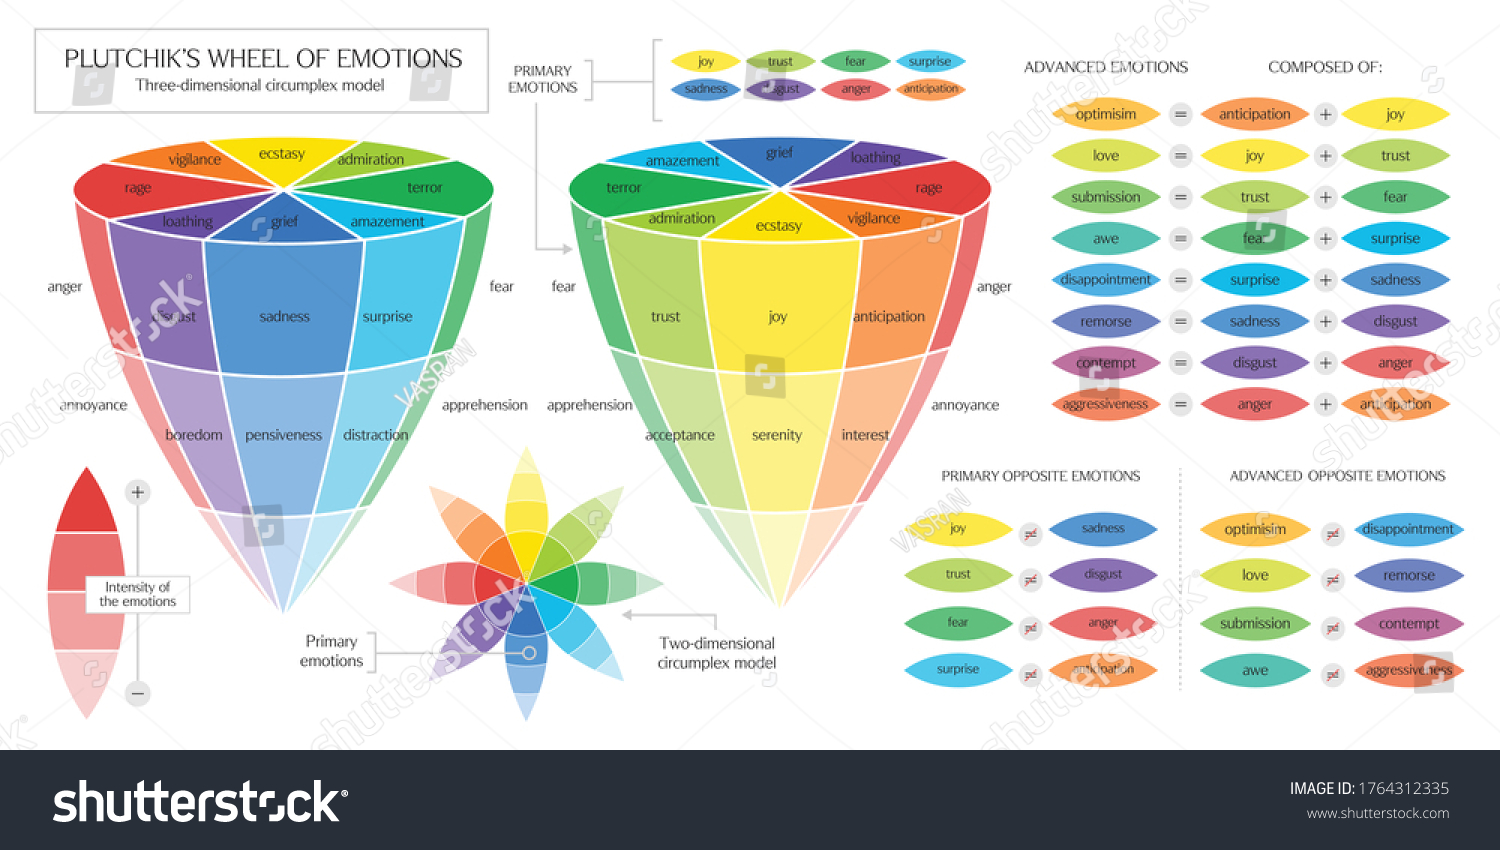 Emotional Range Color Wheel About Feelings: Ñ�Ñ‚Ð¾ÐºÐ¾Ð²Ð°Ñ� Ð²ÐµÐºÑ‚Ð¾Ñ€Ð½Ð°Ñ� Ð³Ñ€Ð°Ñ„Ð¸ÐºÐ° (Ð±ÐµÐ·...